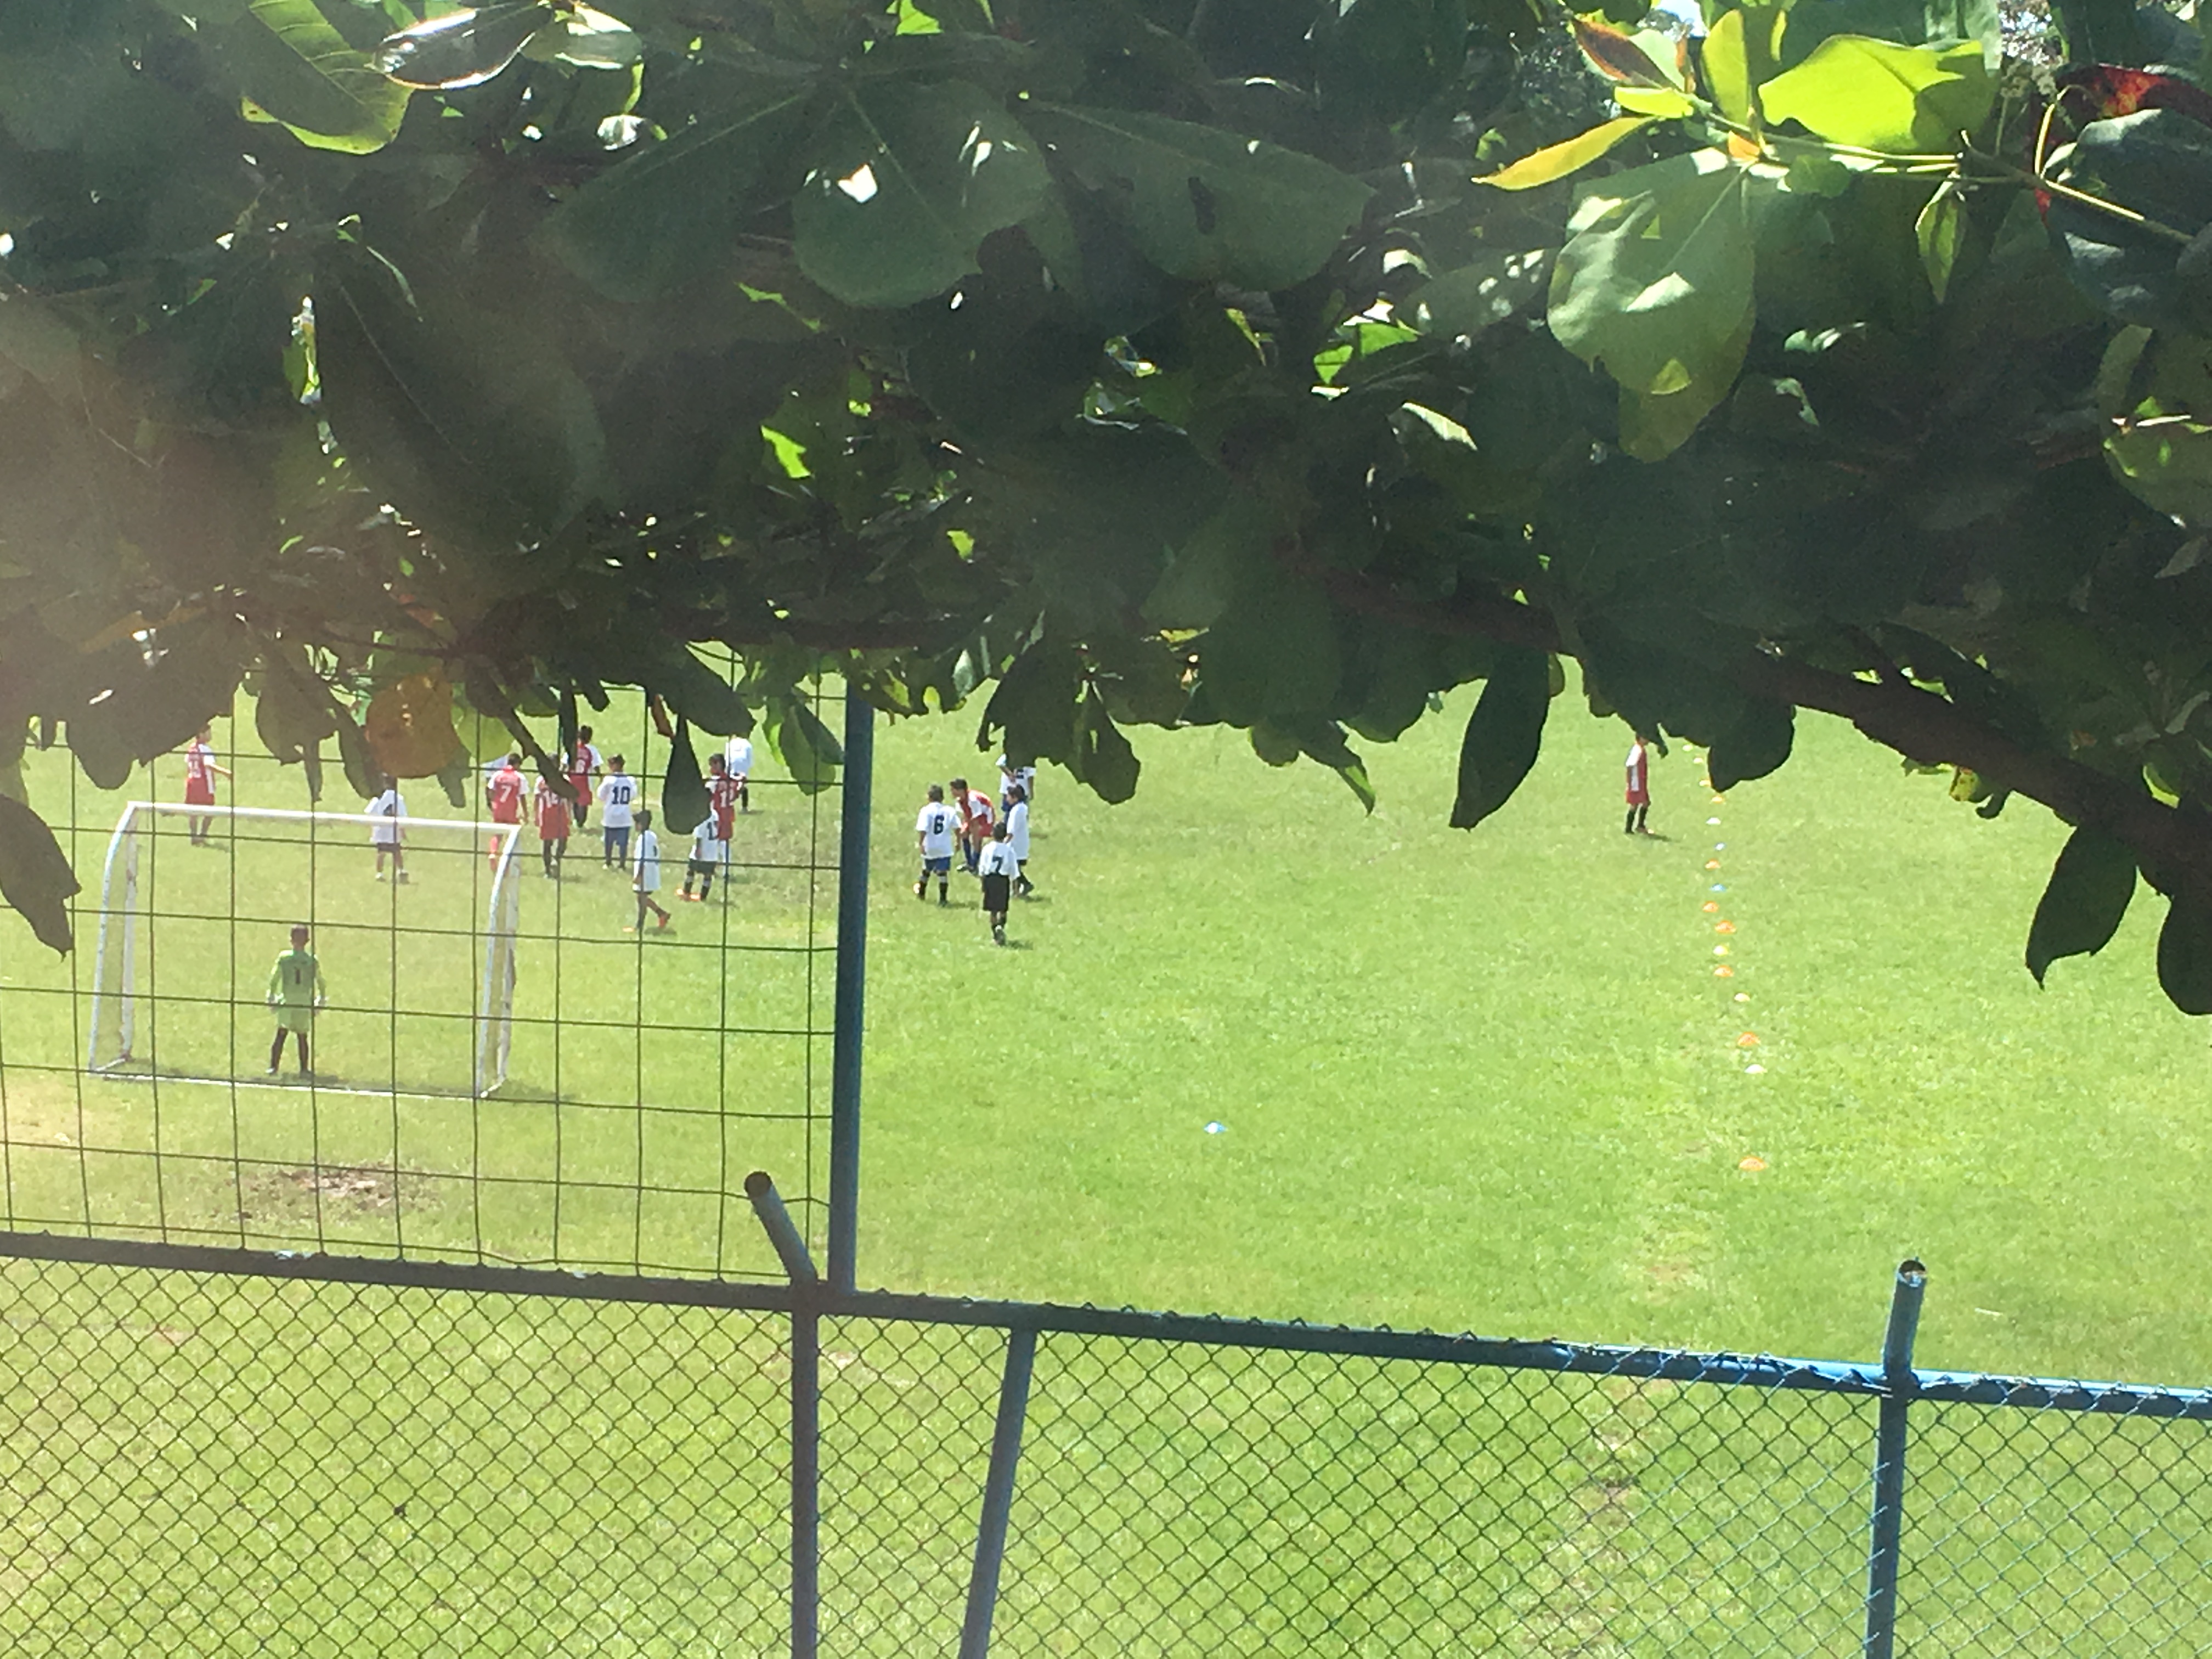 A local boys soccer game